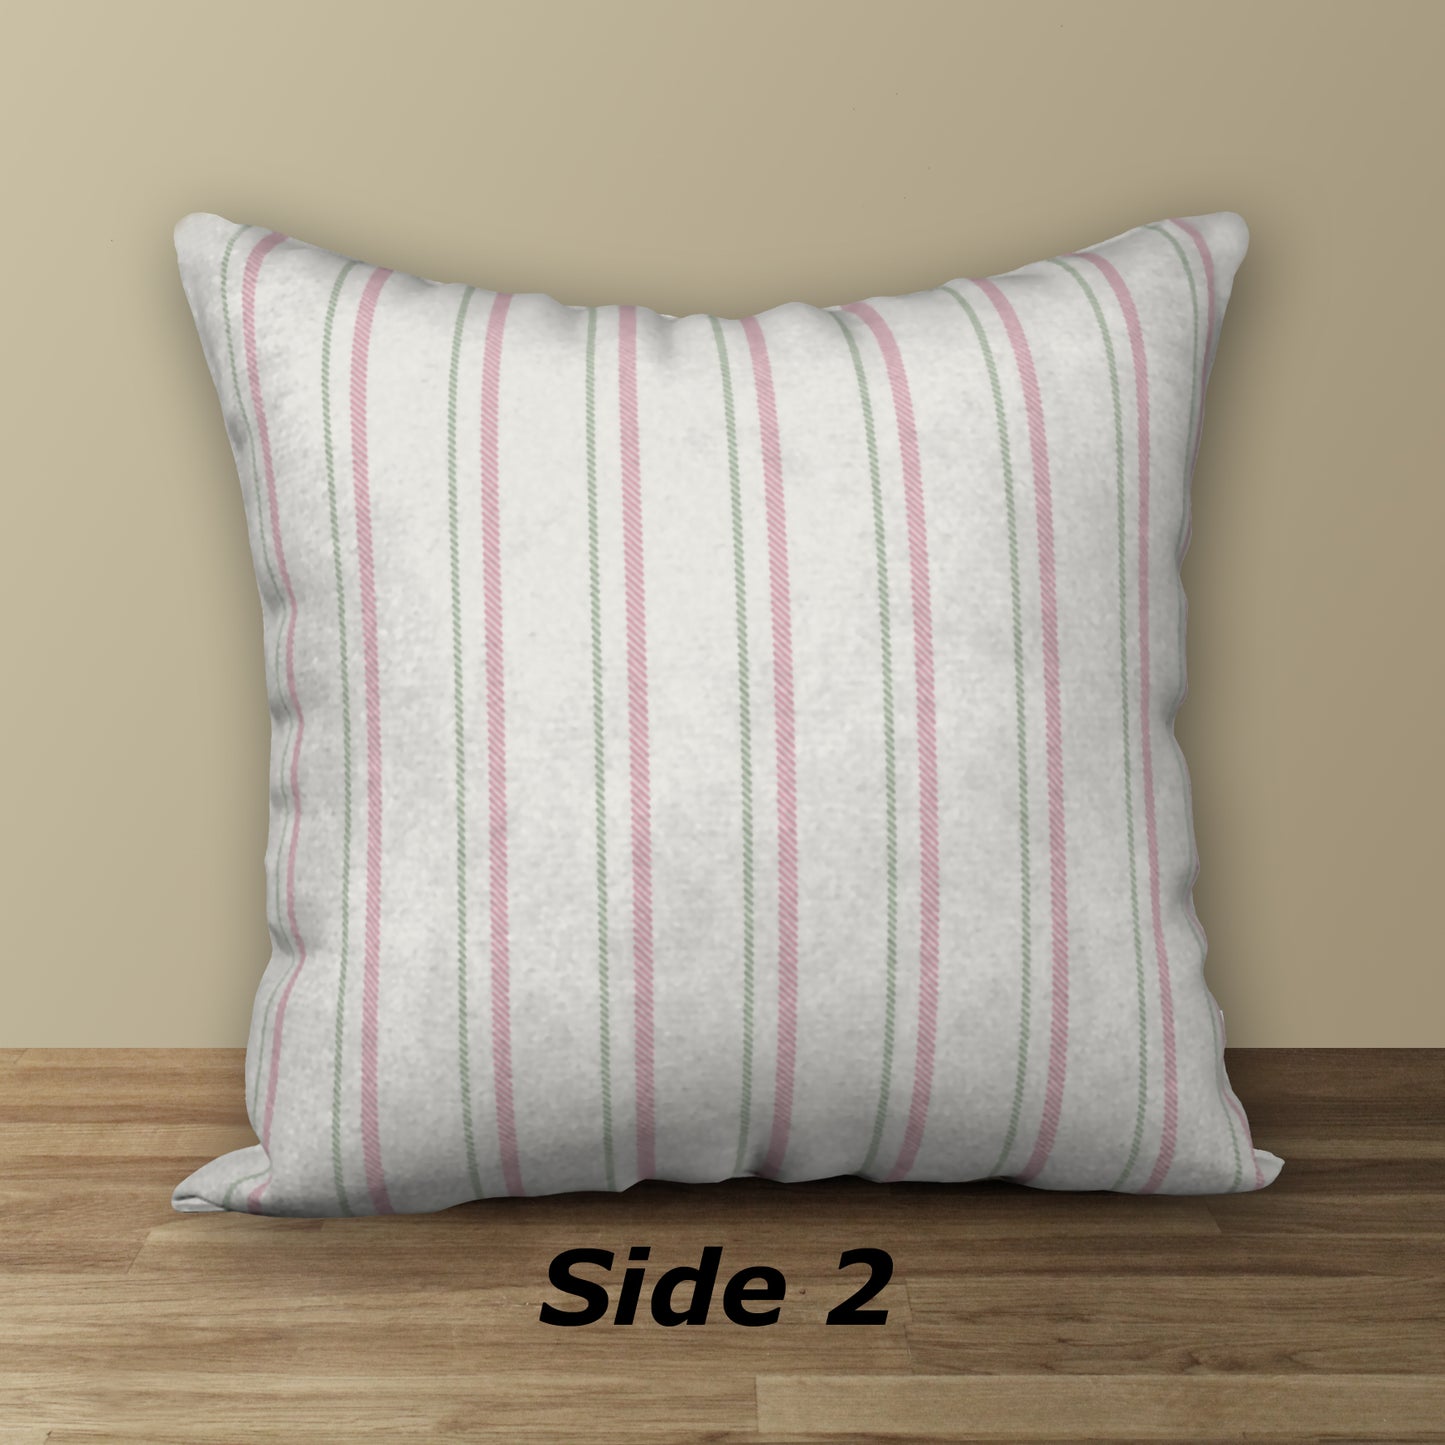 Pink Peonies Designer Pillow, 18"x18"